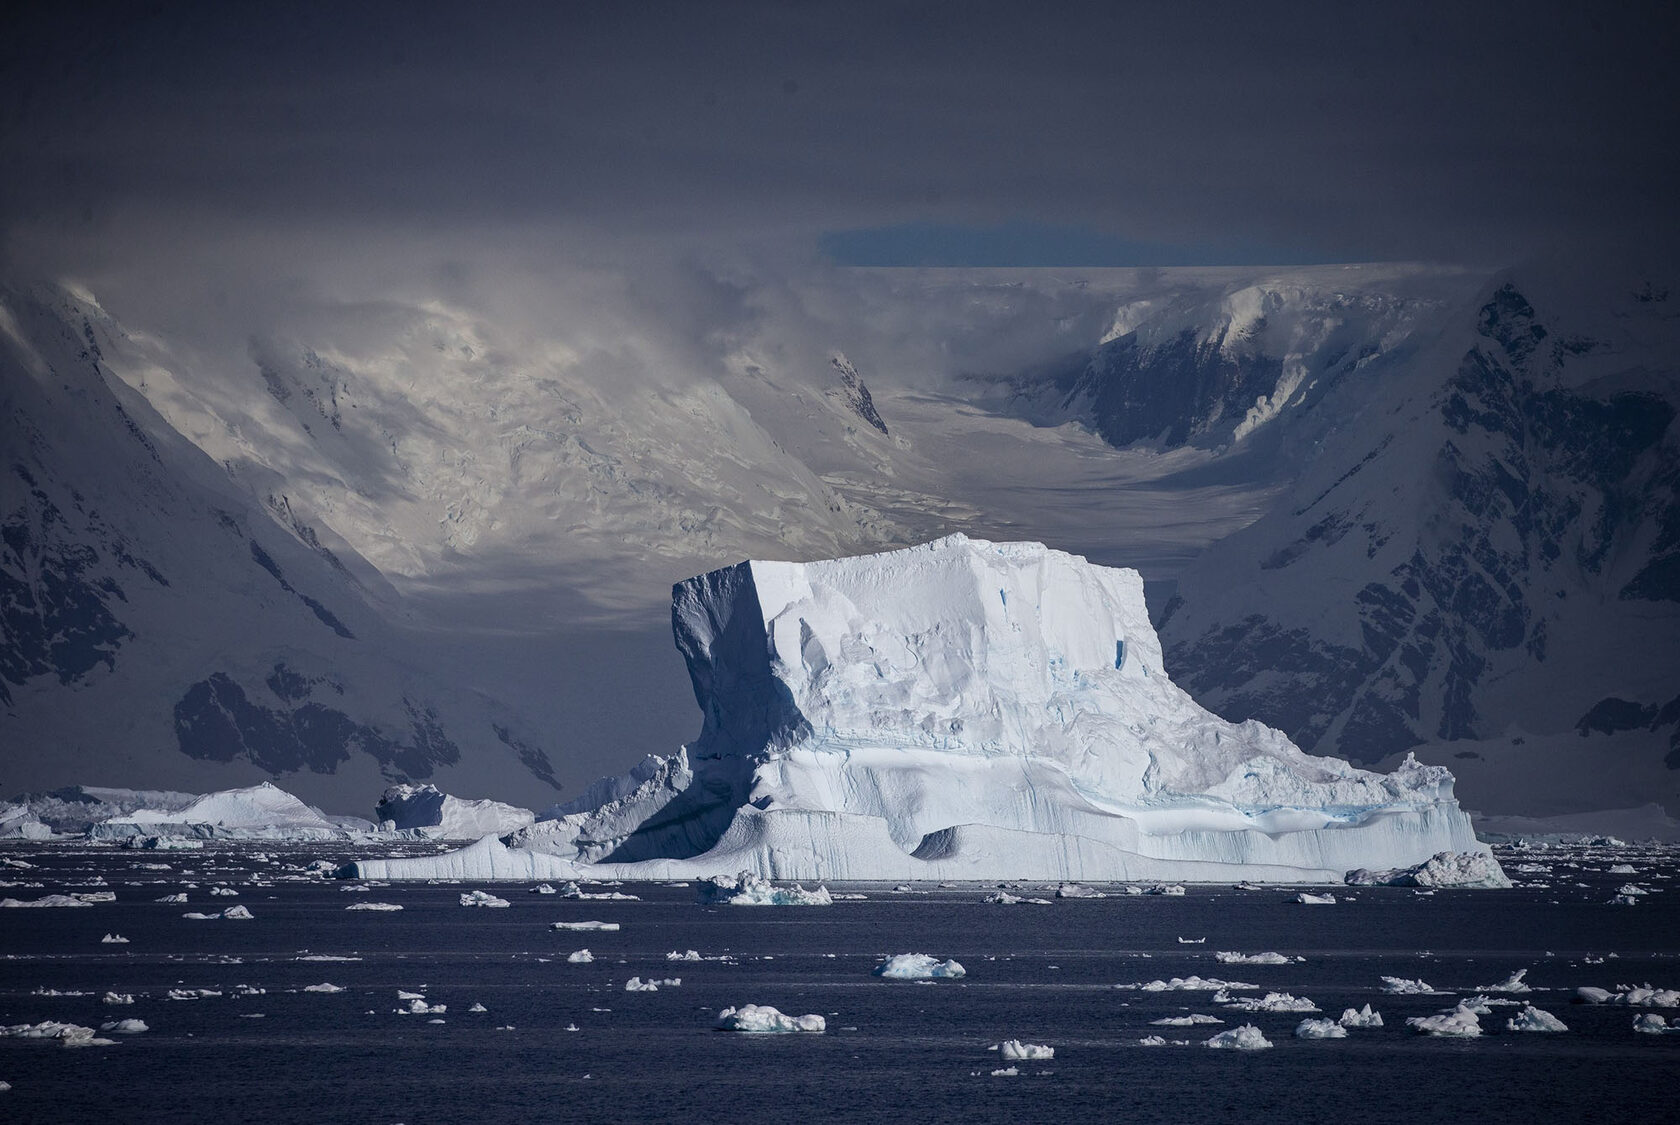 Антарктическое государство. Антарктика, ледник Шеклтона. Антарктика и Антарктика. Китовая бухта Антарктида. Ледяной Покров Антарктиды.